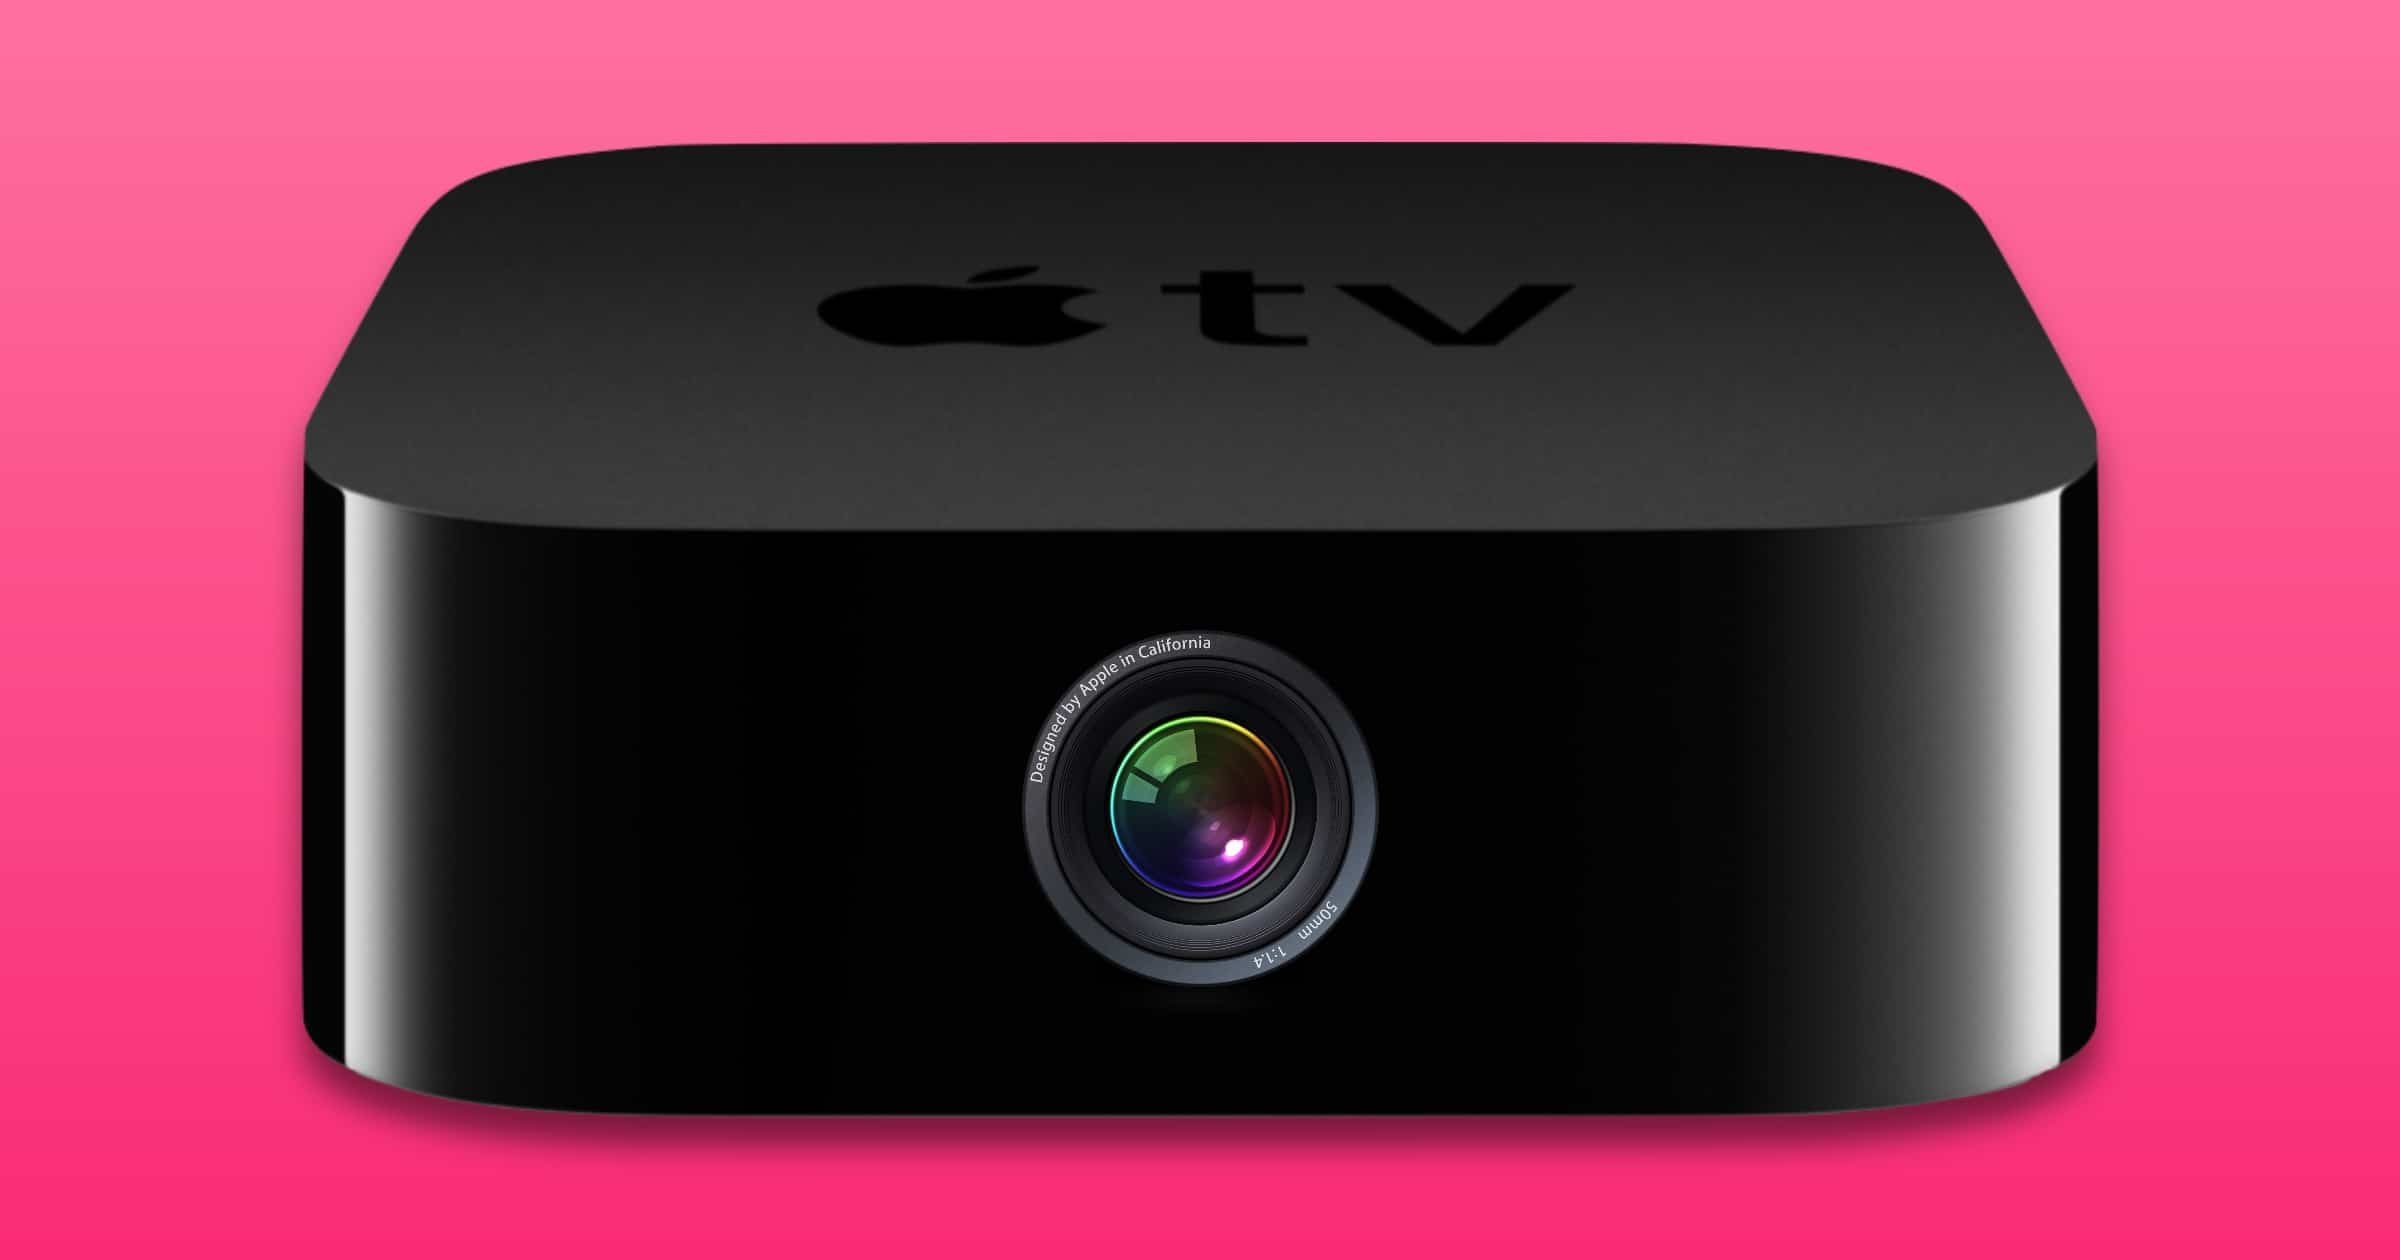 Rumor: Apple Creating Apple TV Box With Camera and Speaker